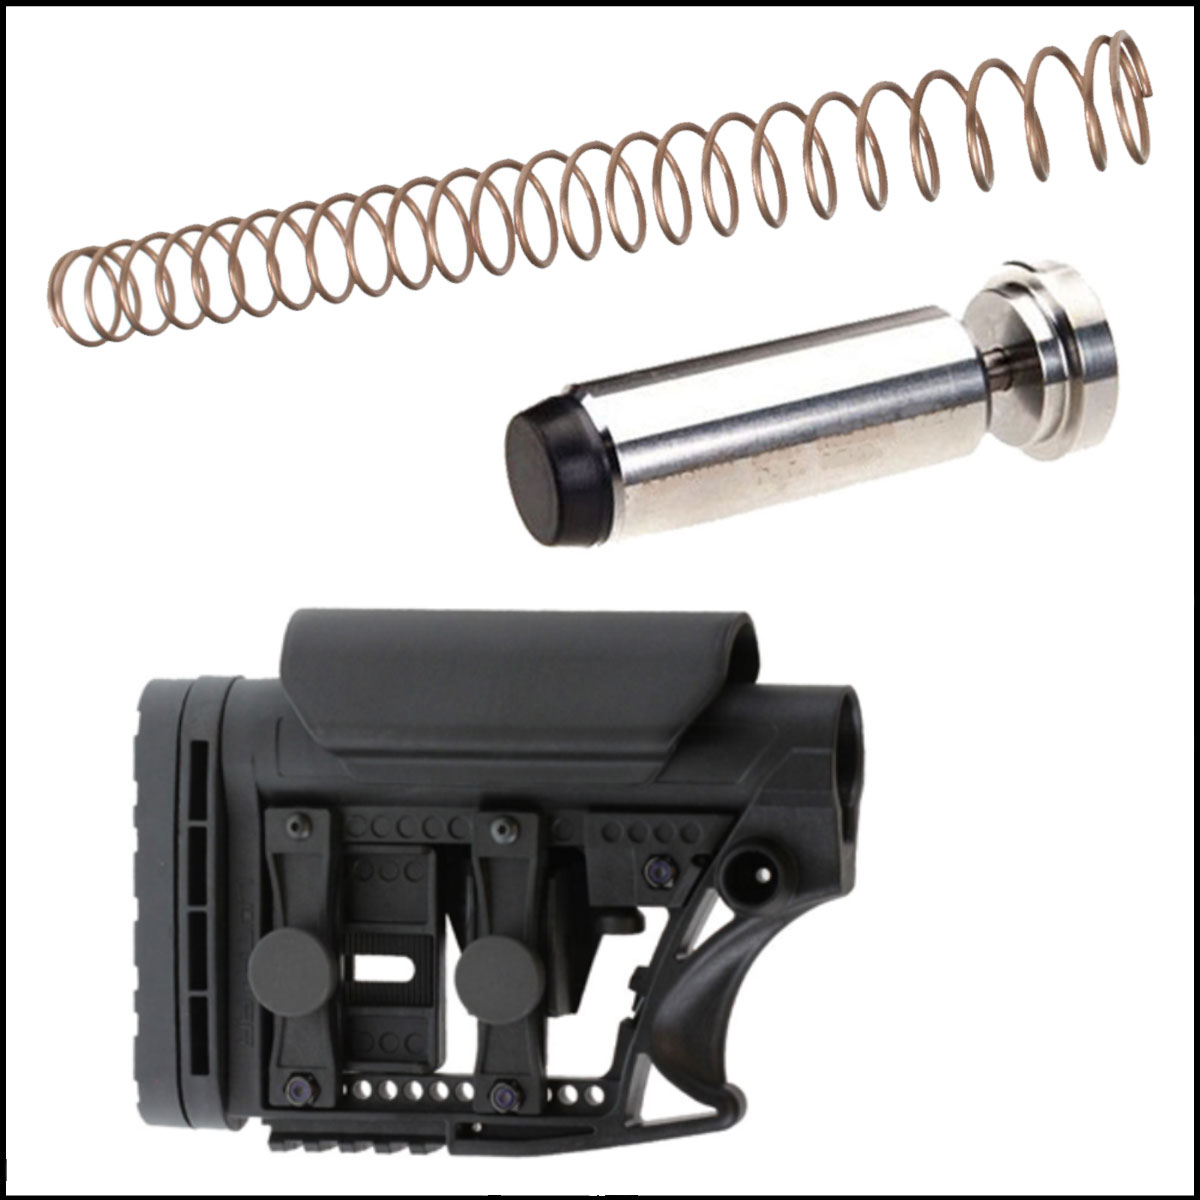 LR-308 Carbine Upgrade Kit: Kyntec Hydraulic Recoil Buffer + Luth-AR LR-308 Carbine Buffer Spring + Luth-AR MBA-3 AR-15 Mil-Spec Stock